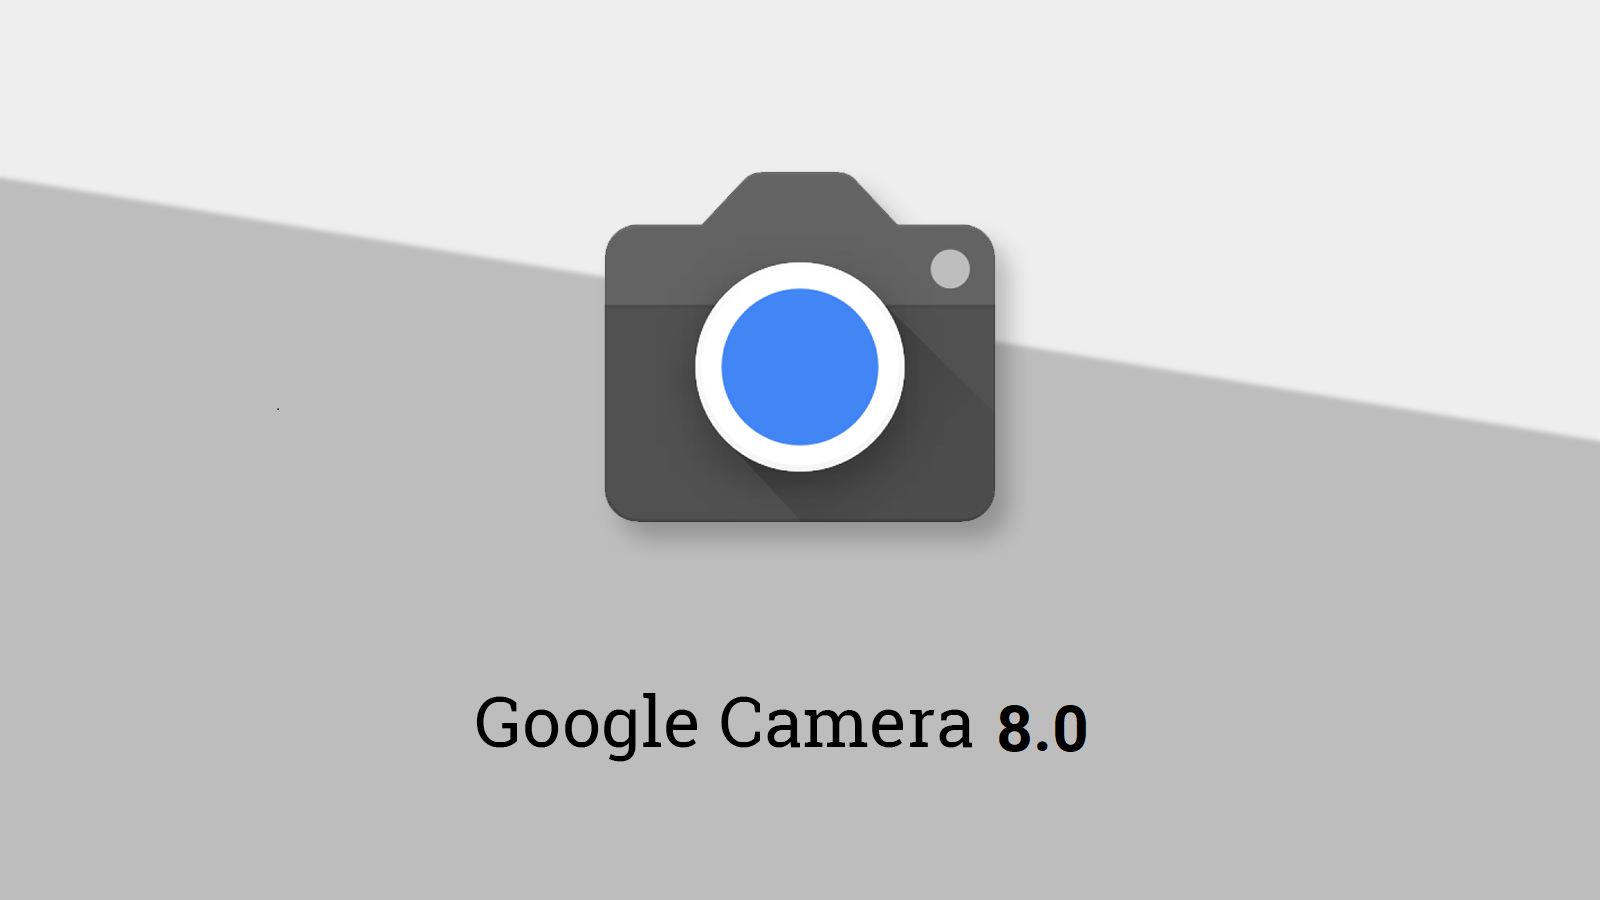 Google Camera 8.0